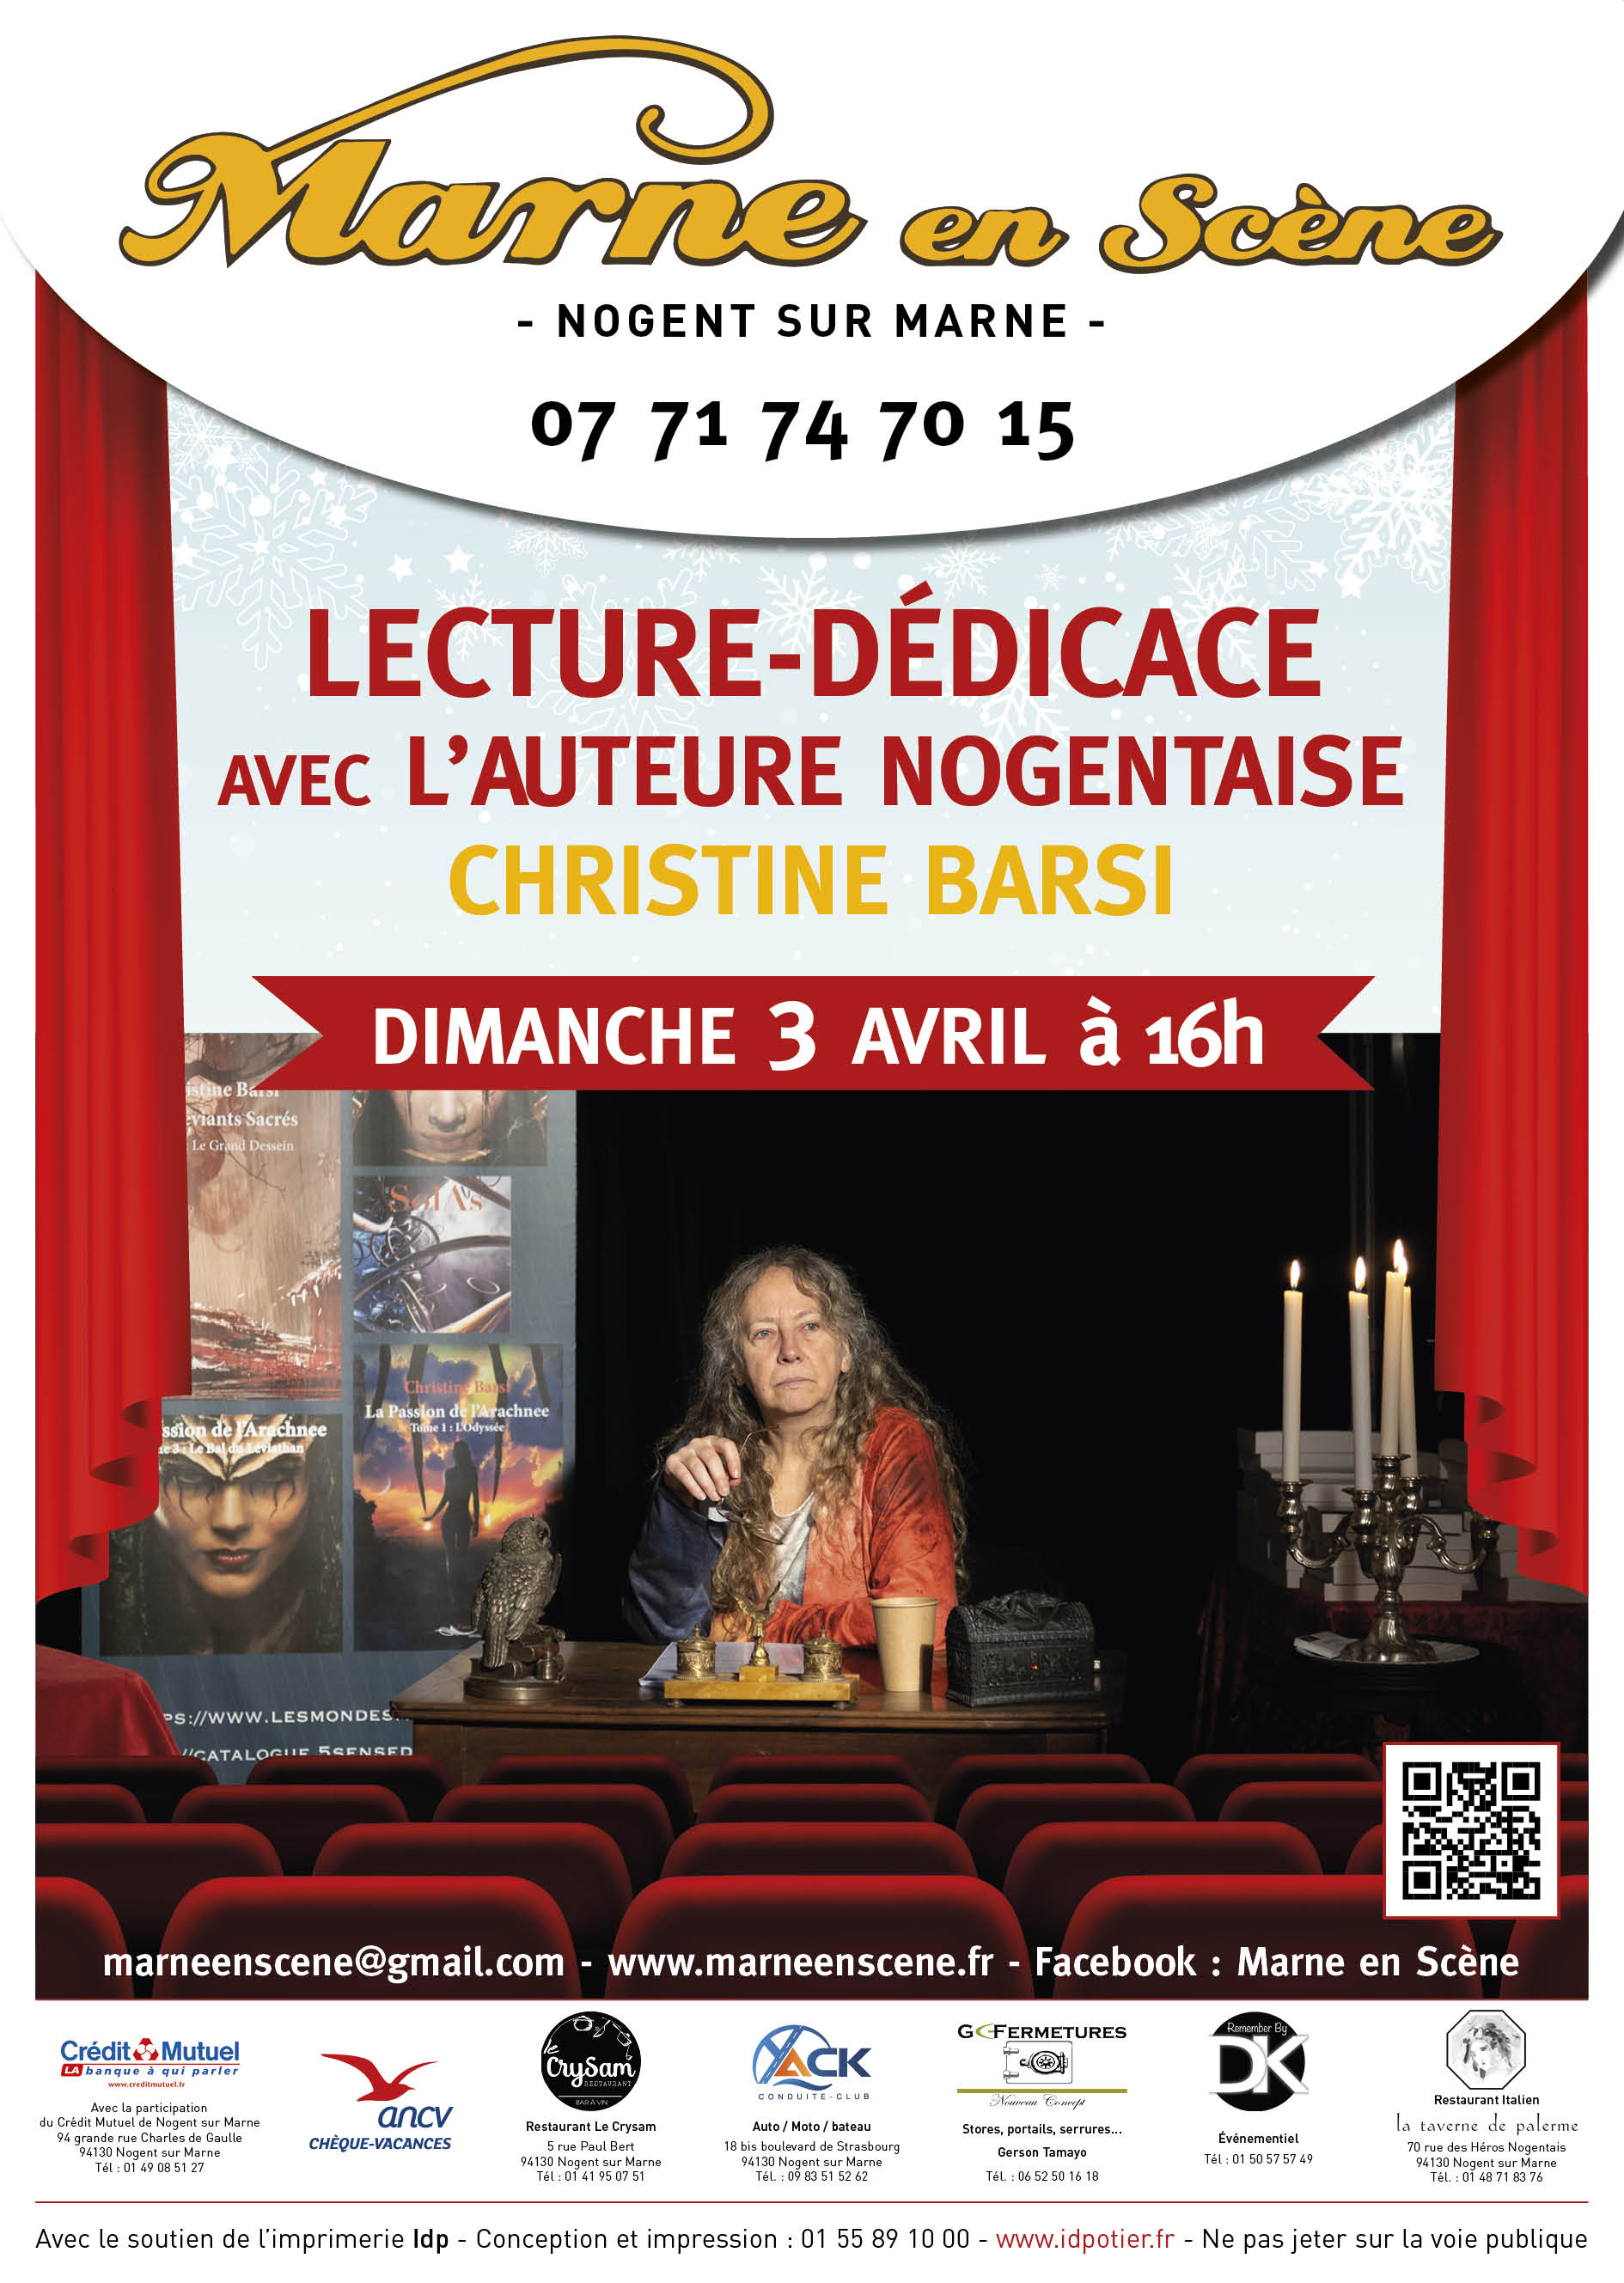 Lecture Dedicace de l'auteure Christine Barsi